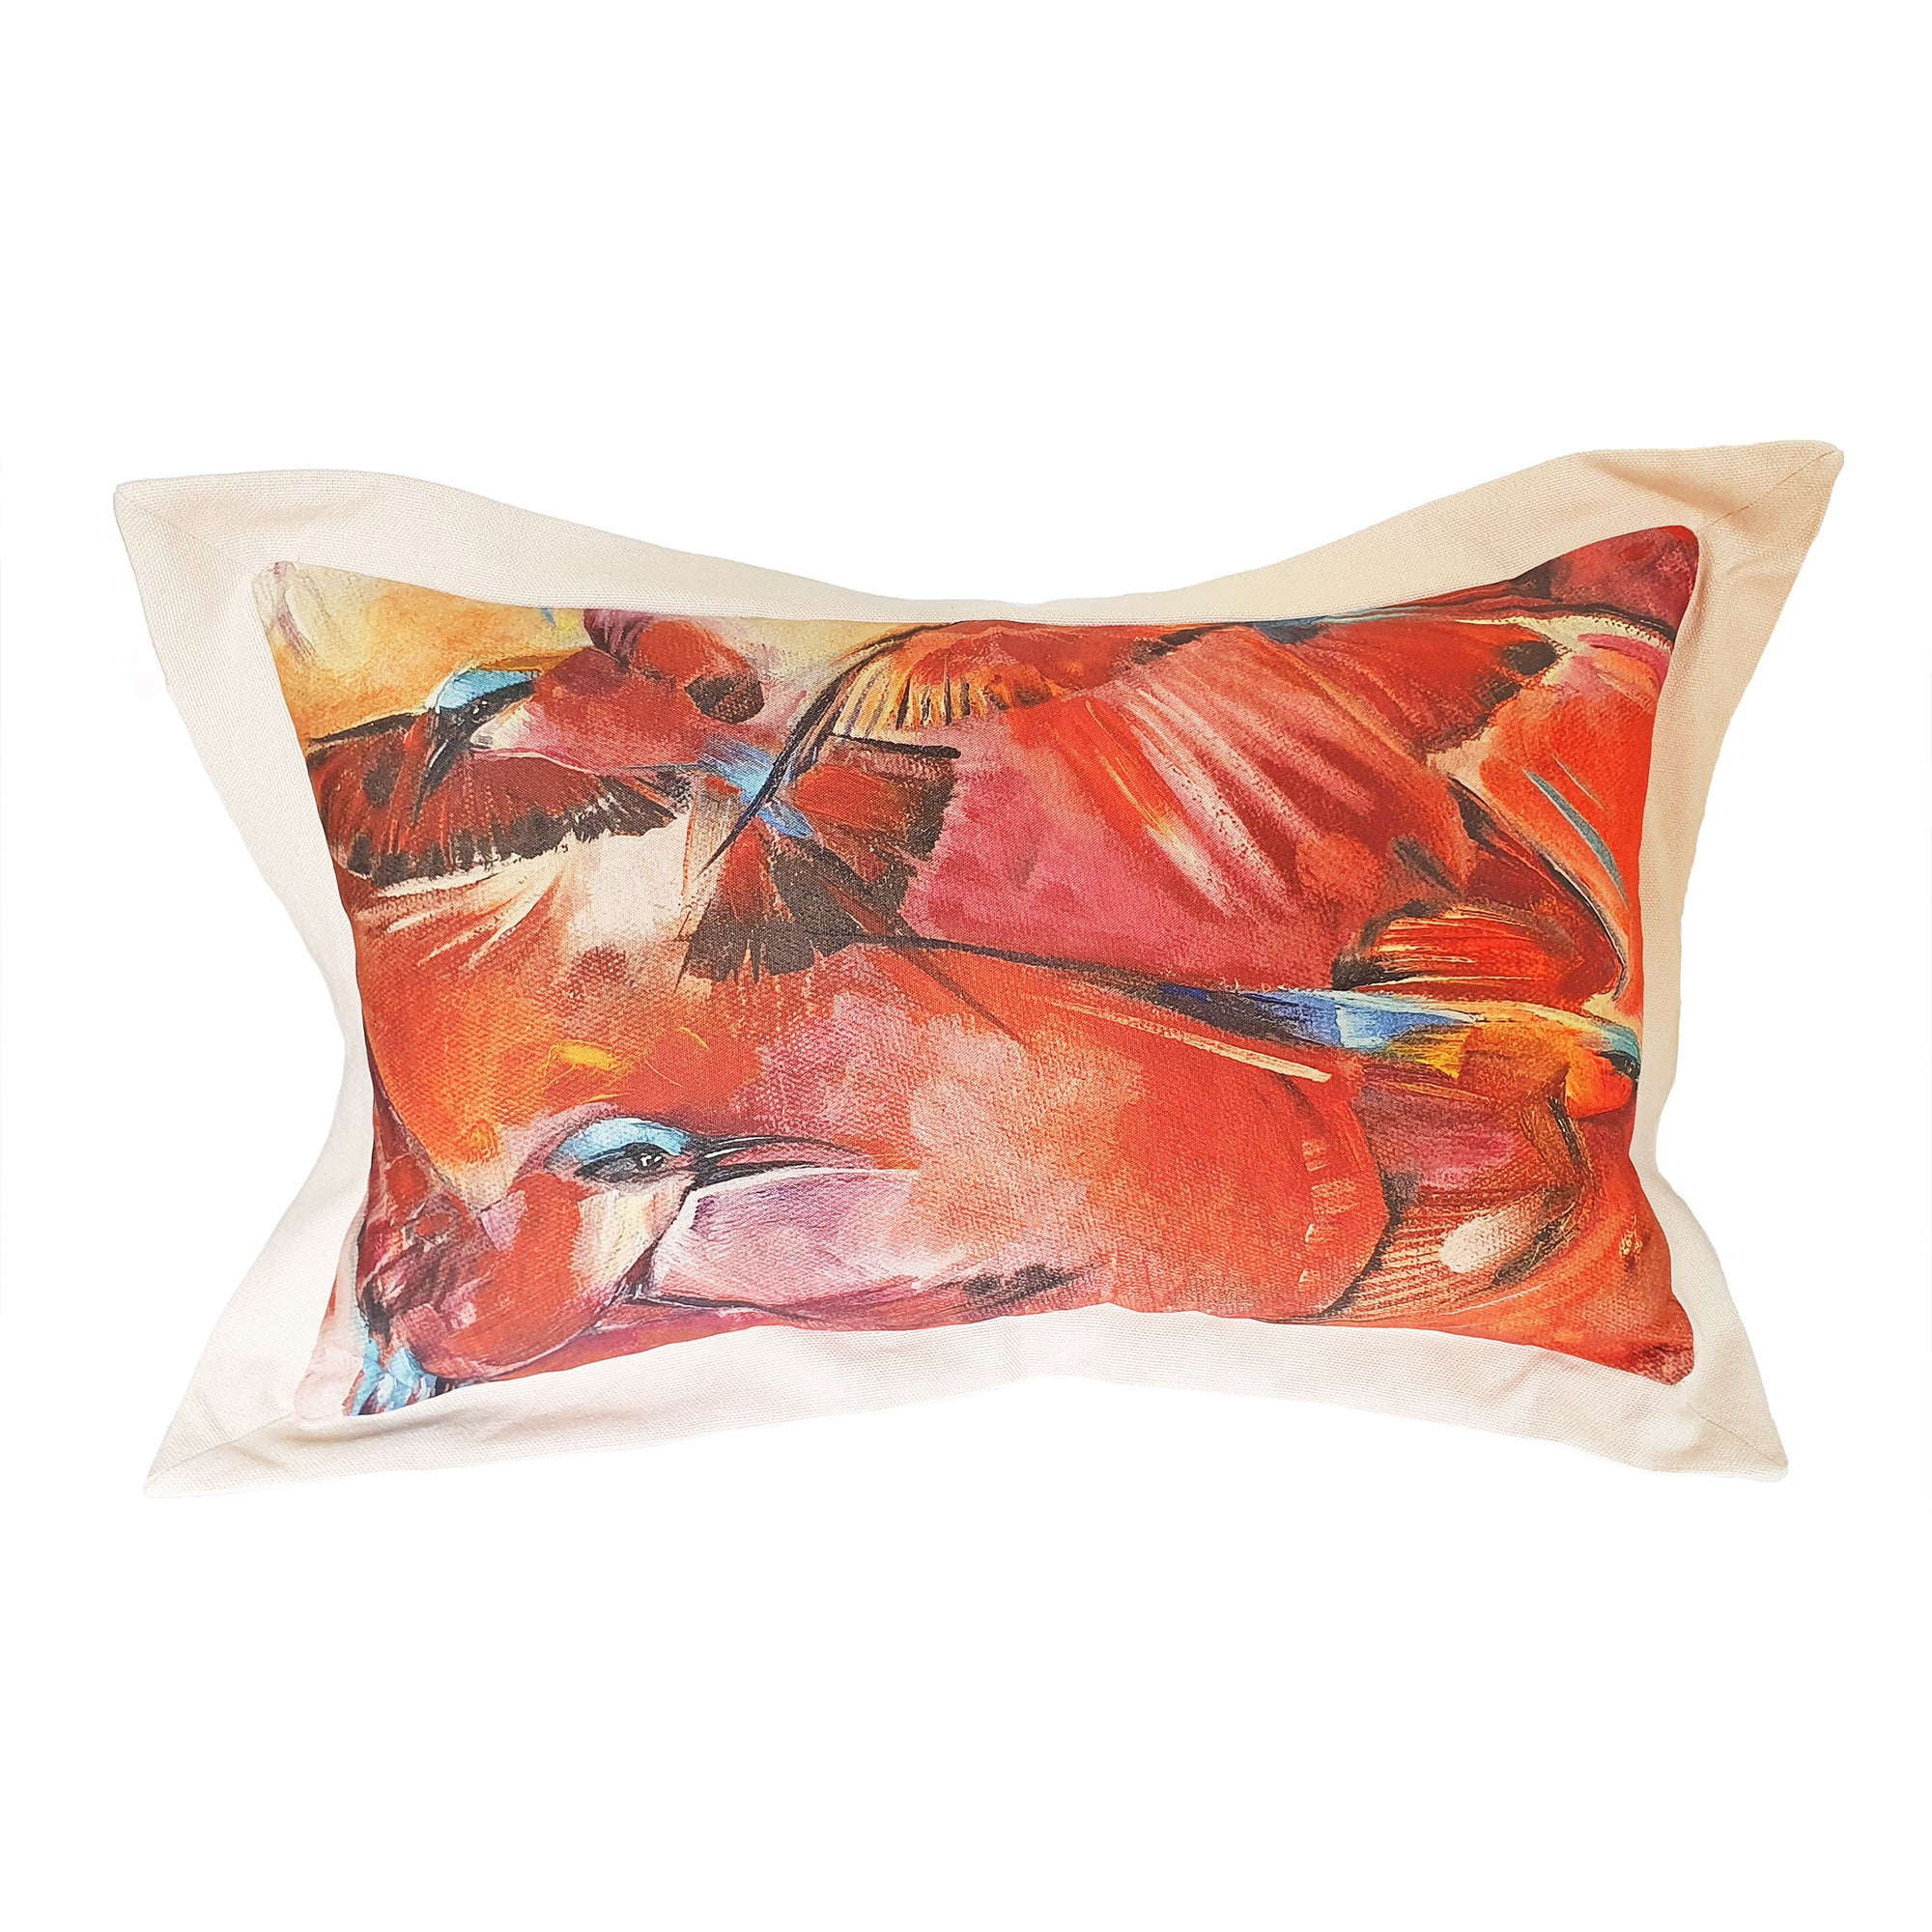 Bee-eater Cushion Cover, 60cm x 30cm, Cotton-linen blend